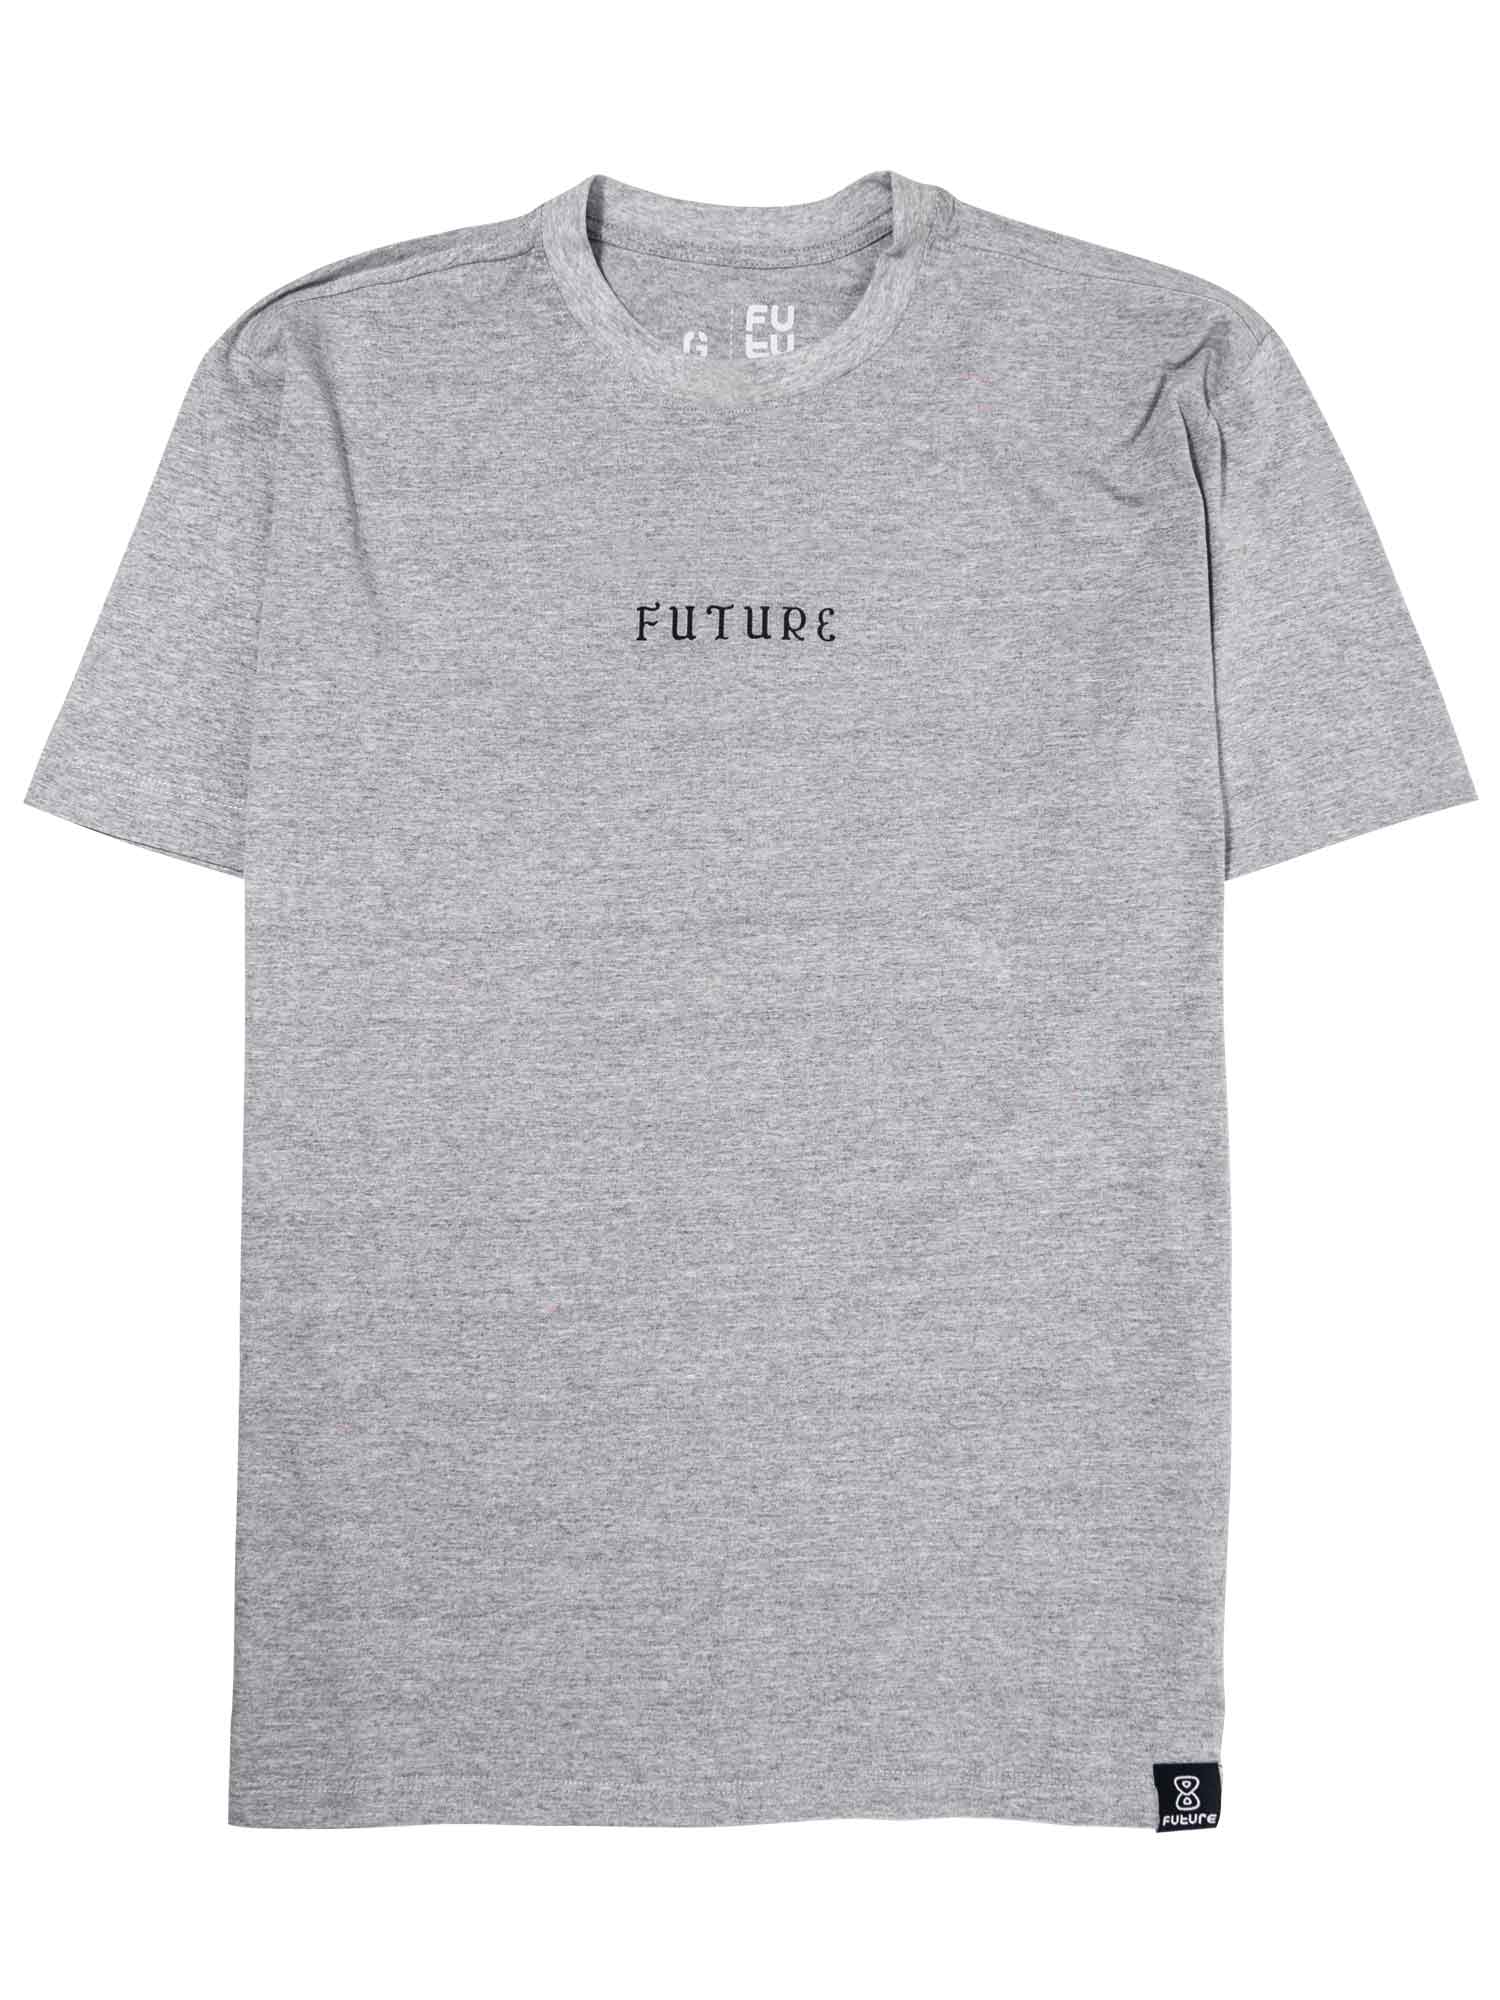     Camiseta-Future-Time-Vs-Life-Cinza-Mescla-Frente